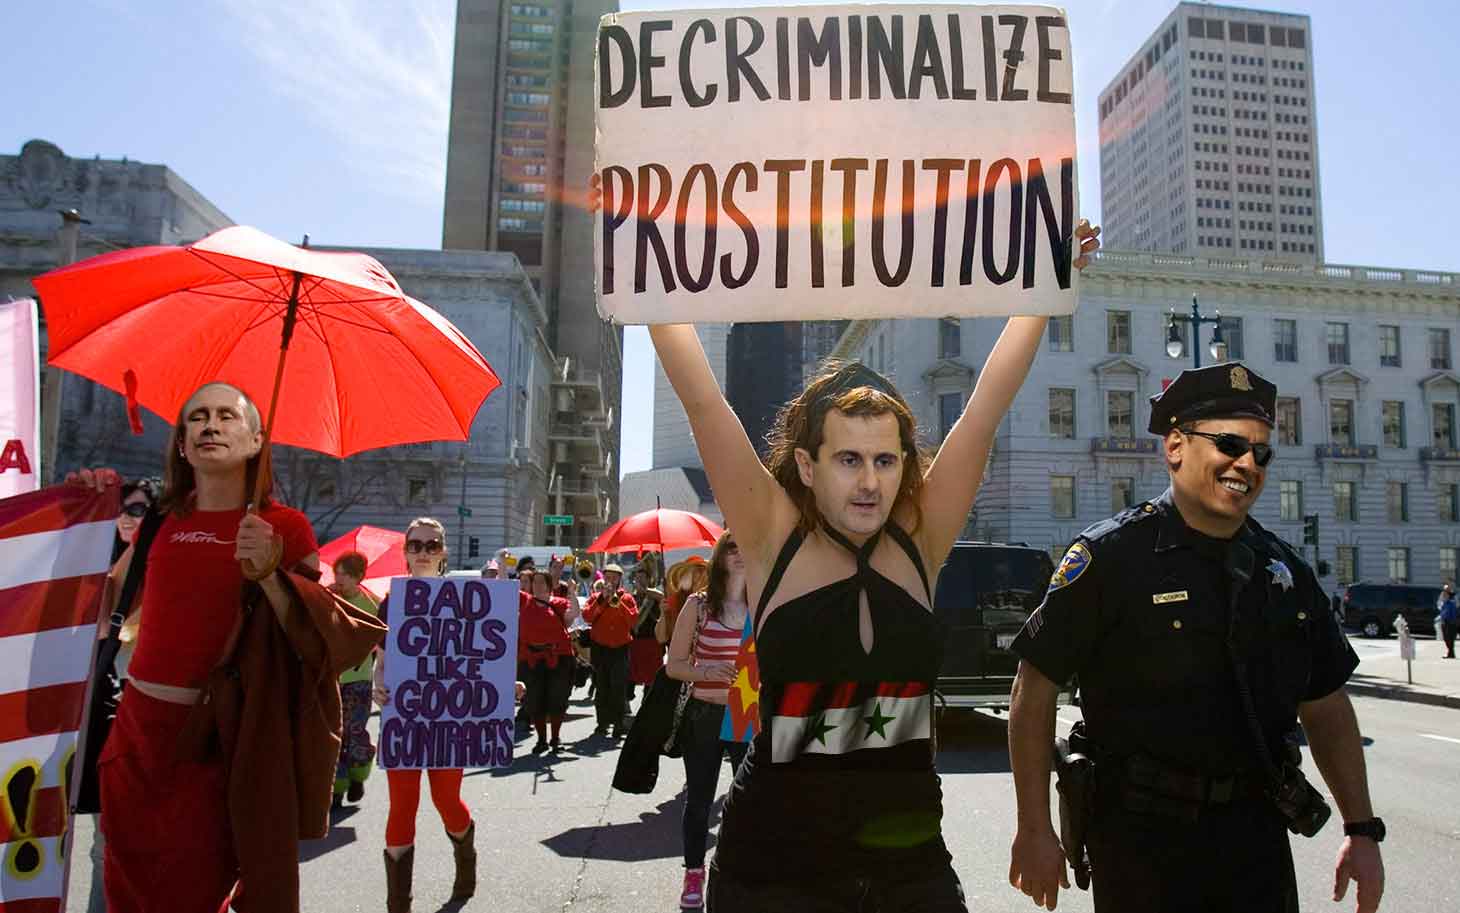 ISIS Sex Slaves – Assad, Putin, and Obama Decriminalize Prostitution